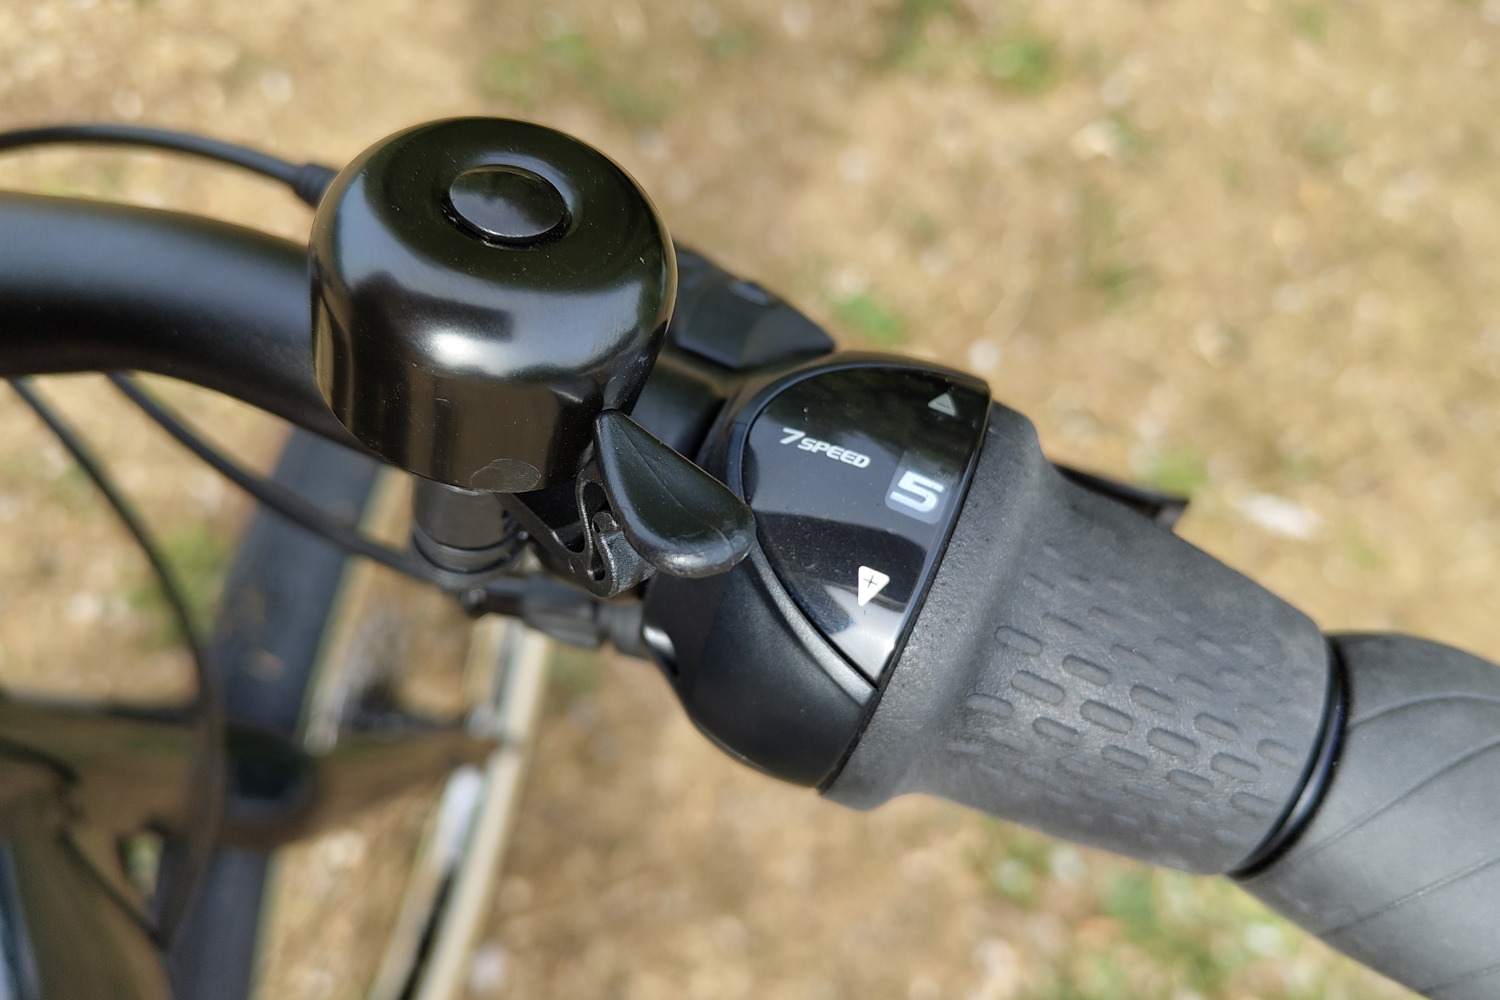 Momentum Transend E+ electric bike review gear shifter